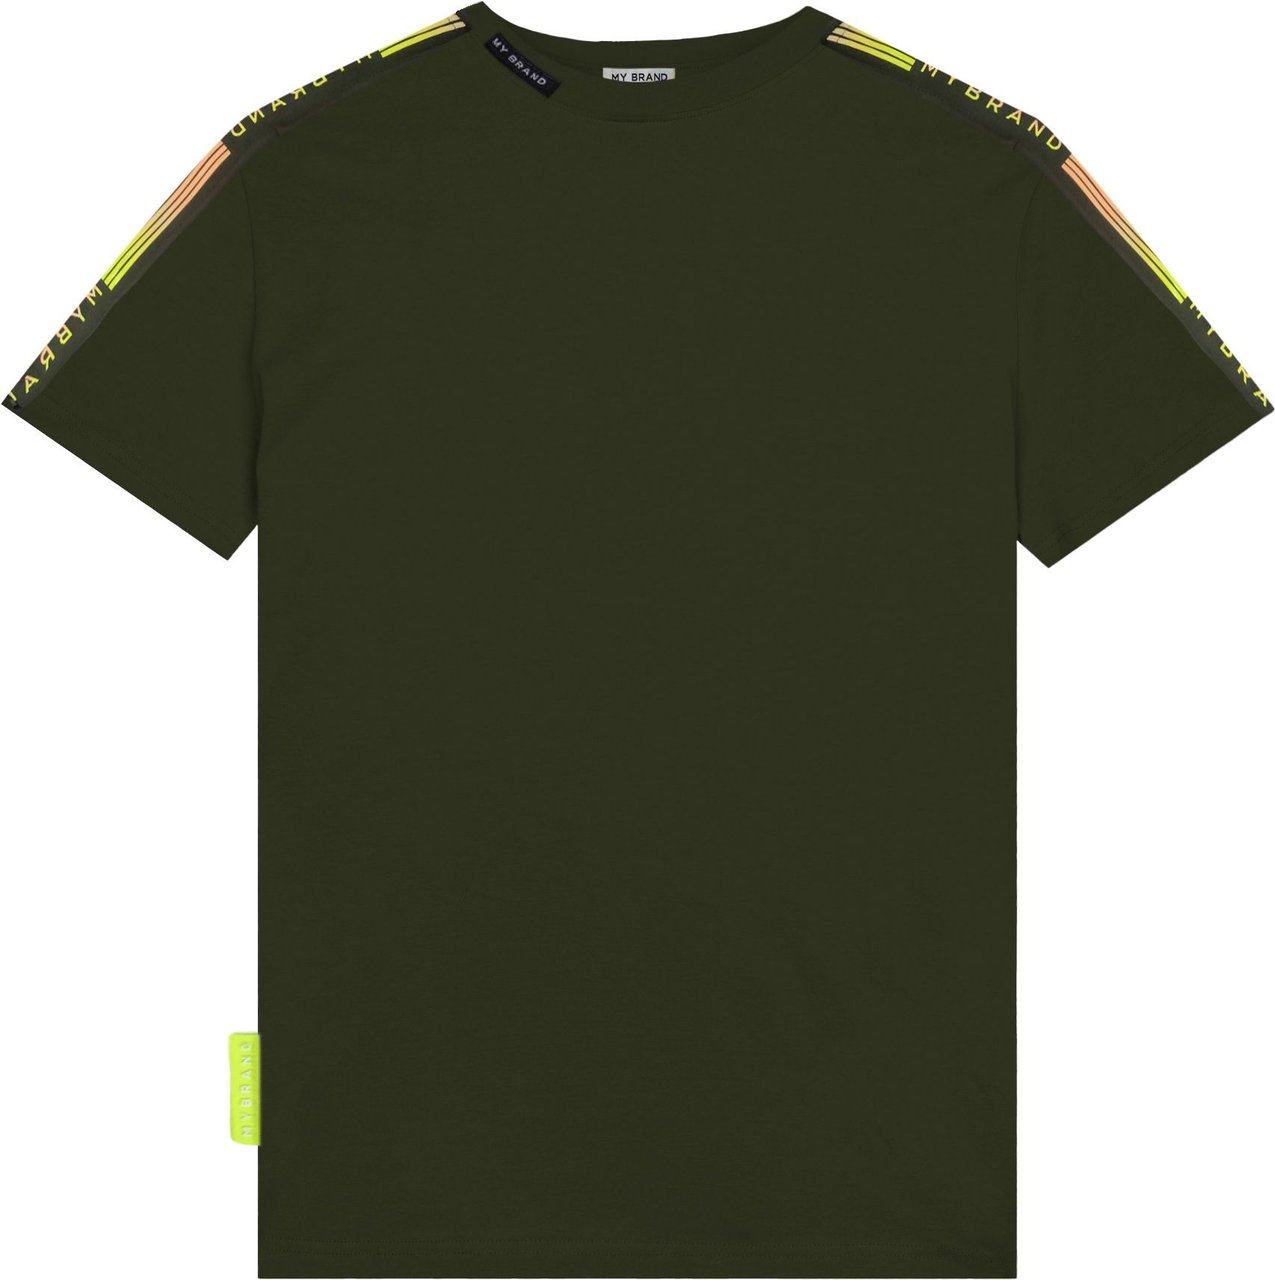 My Brand Mb stripes gradient t shirt Groen